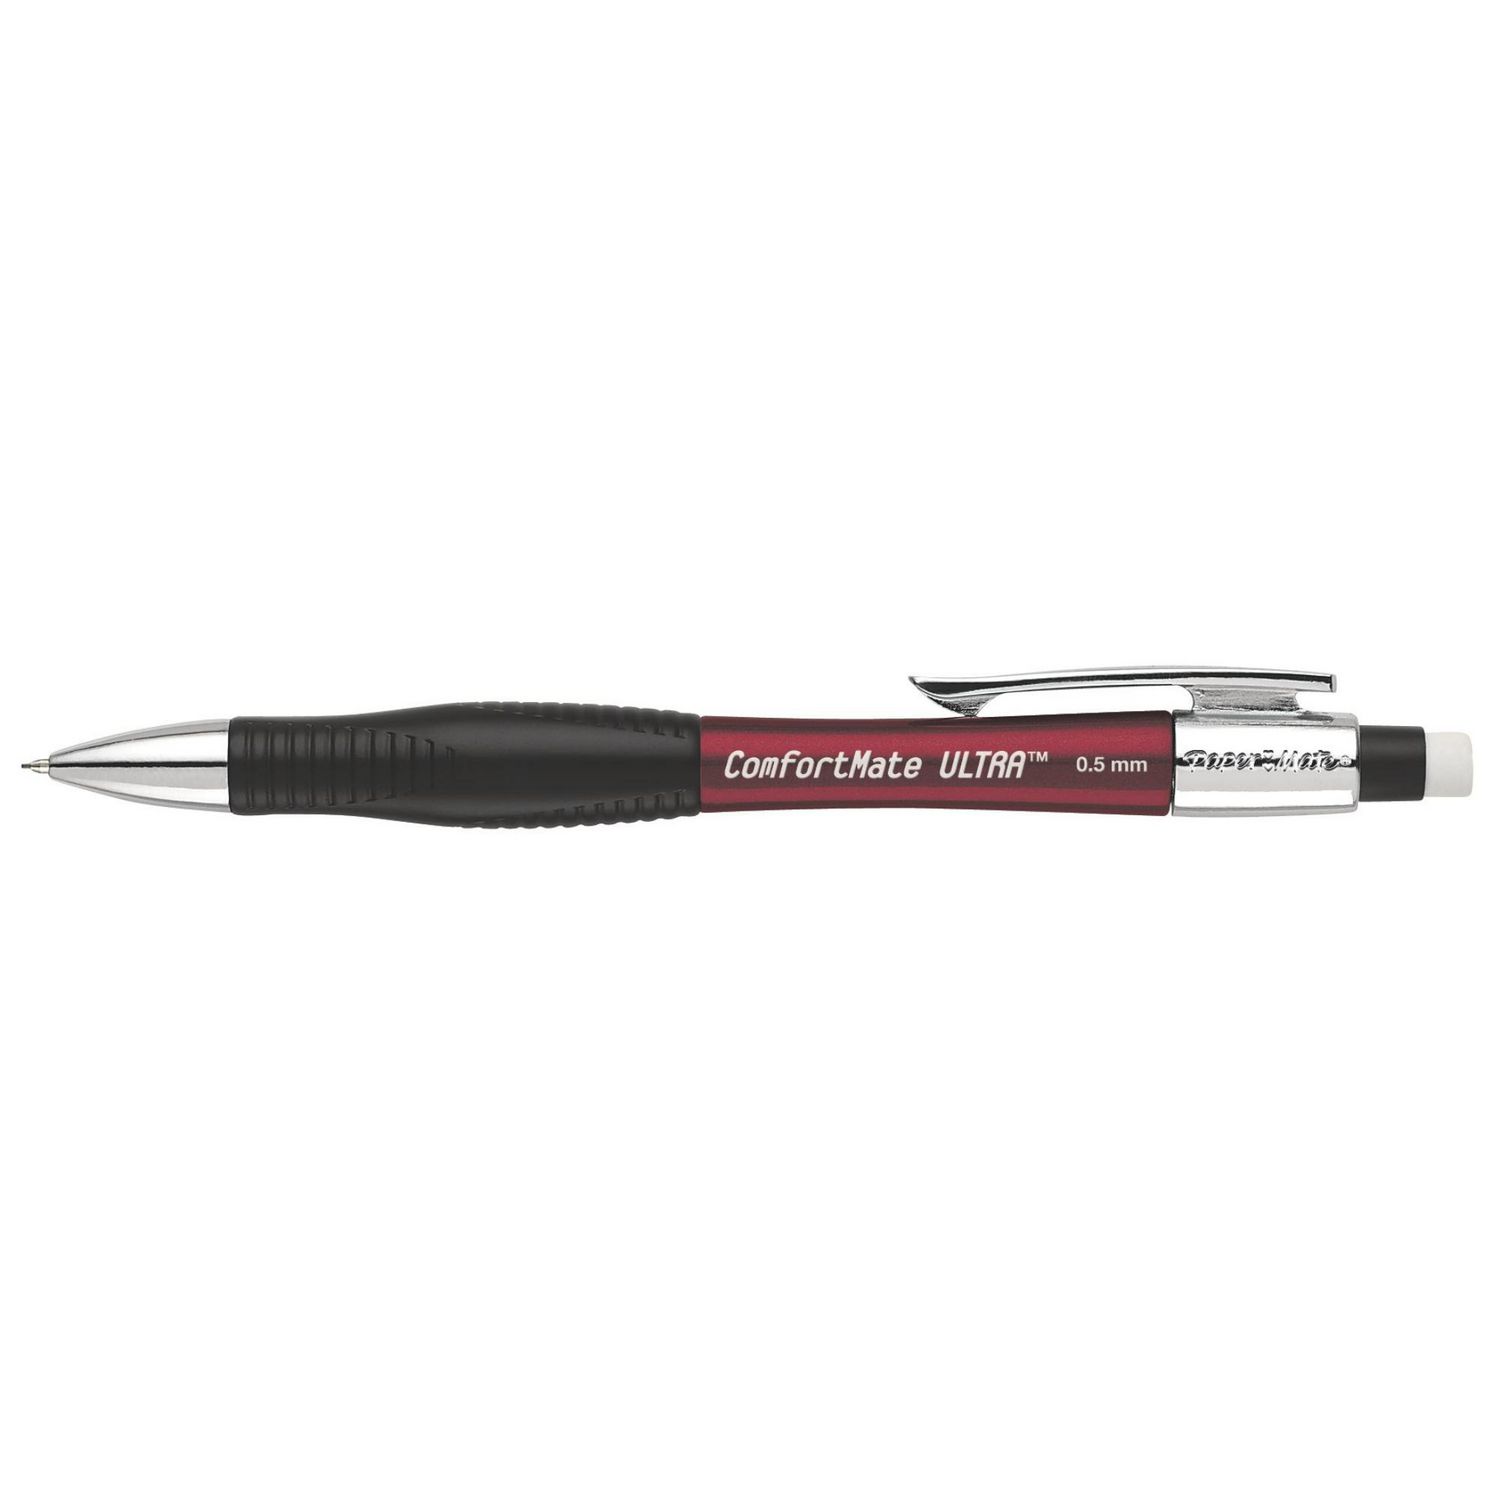 Merangue® Comfort Grip Mechanical Pencils with White Eraser, 0.7mm